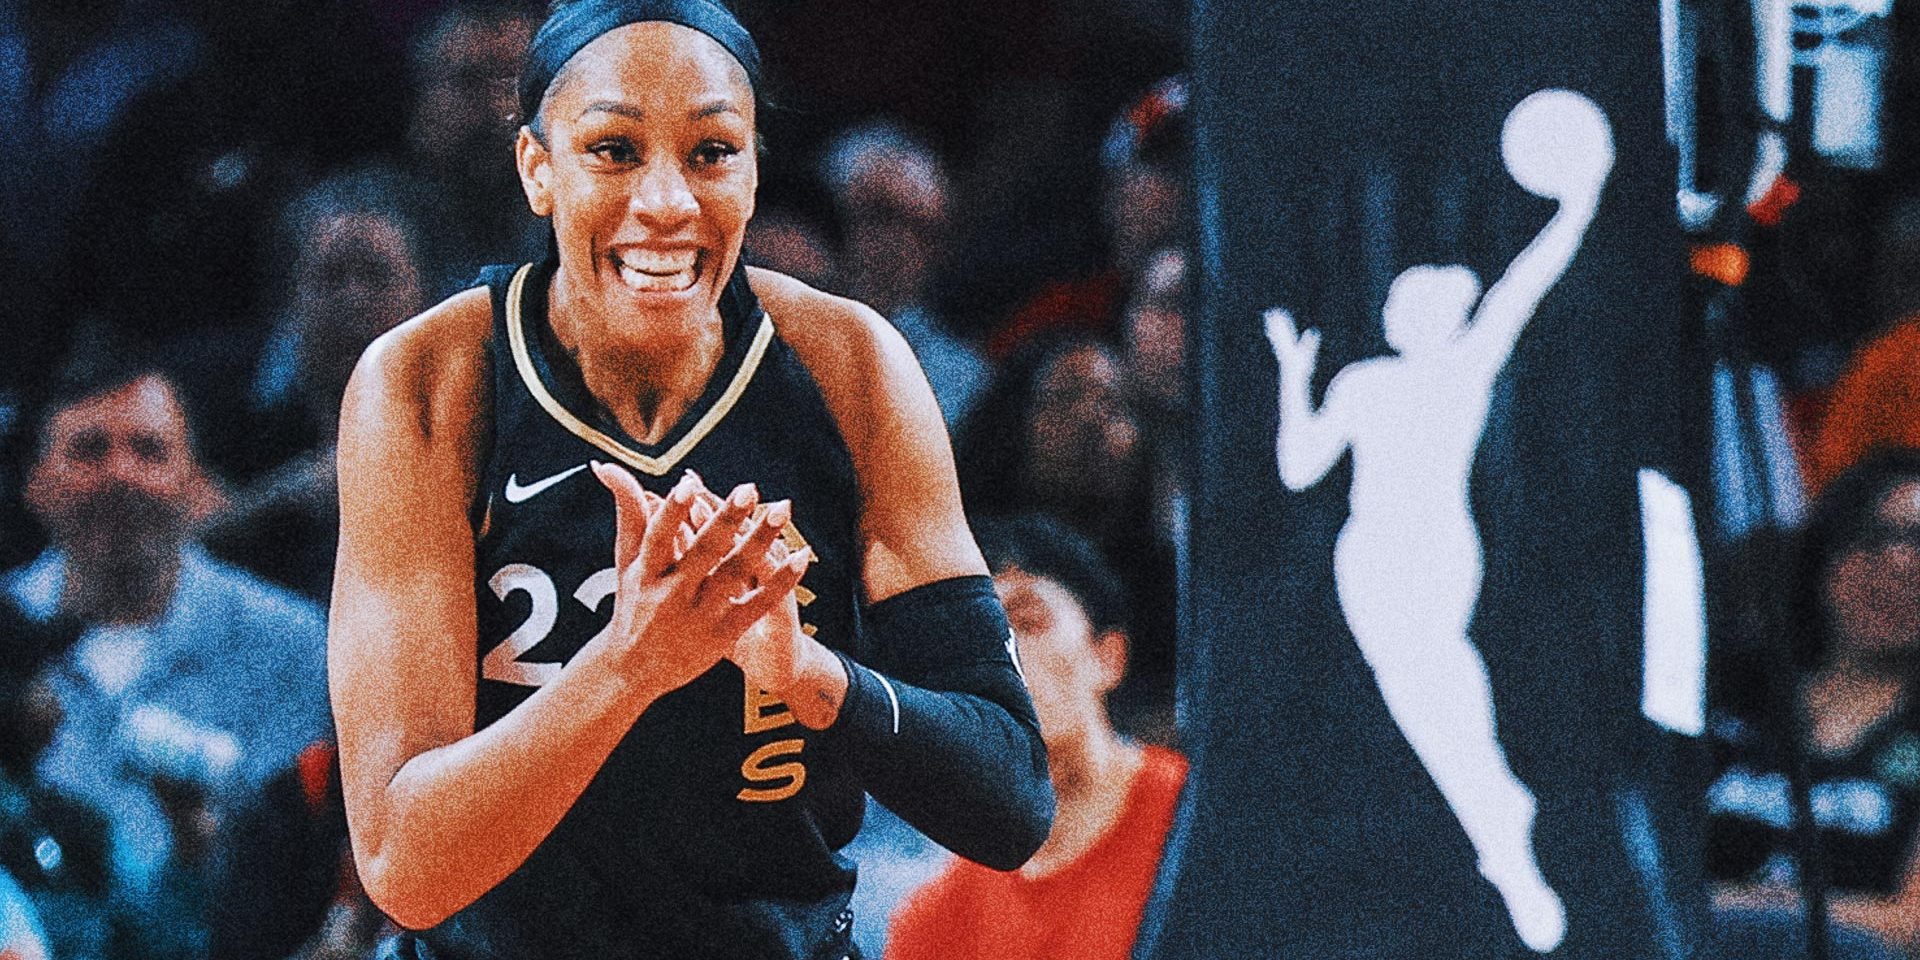 Las Vegas Aces star A'ja Wilson ties WNBA record with 53 points